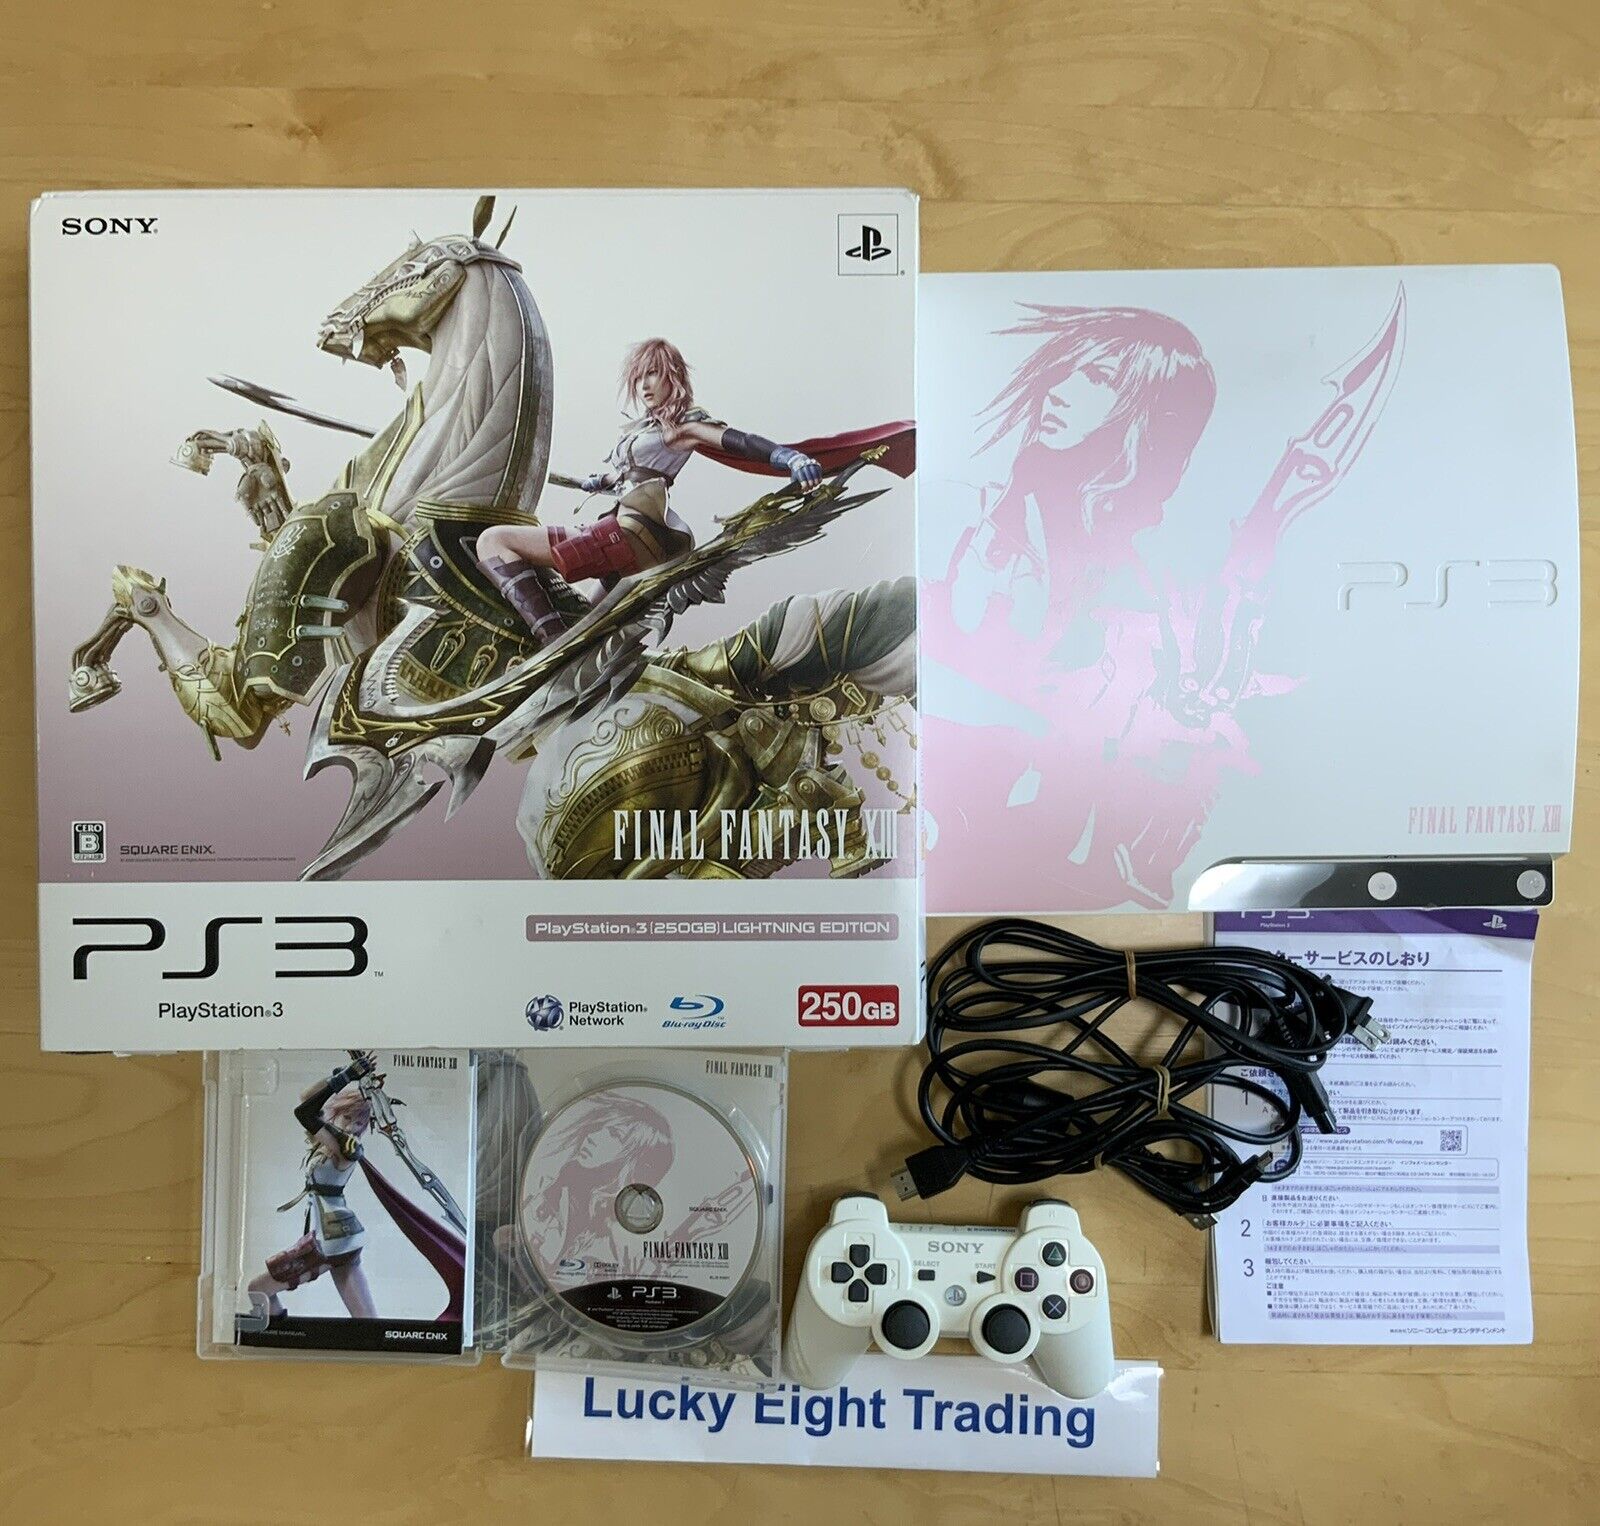 PS3 FINAL FANTASY XIII LIGHTNING EDITION Console Box Sony PlayStation 3 [BX]